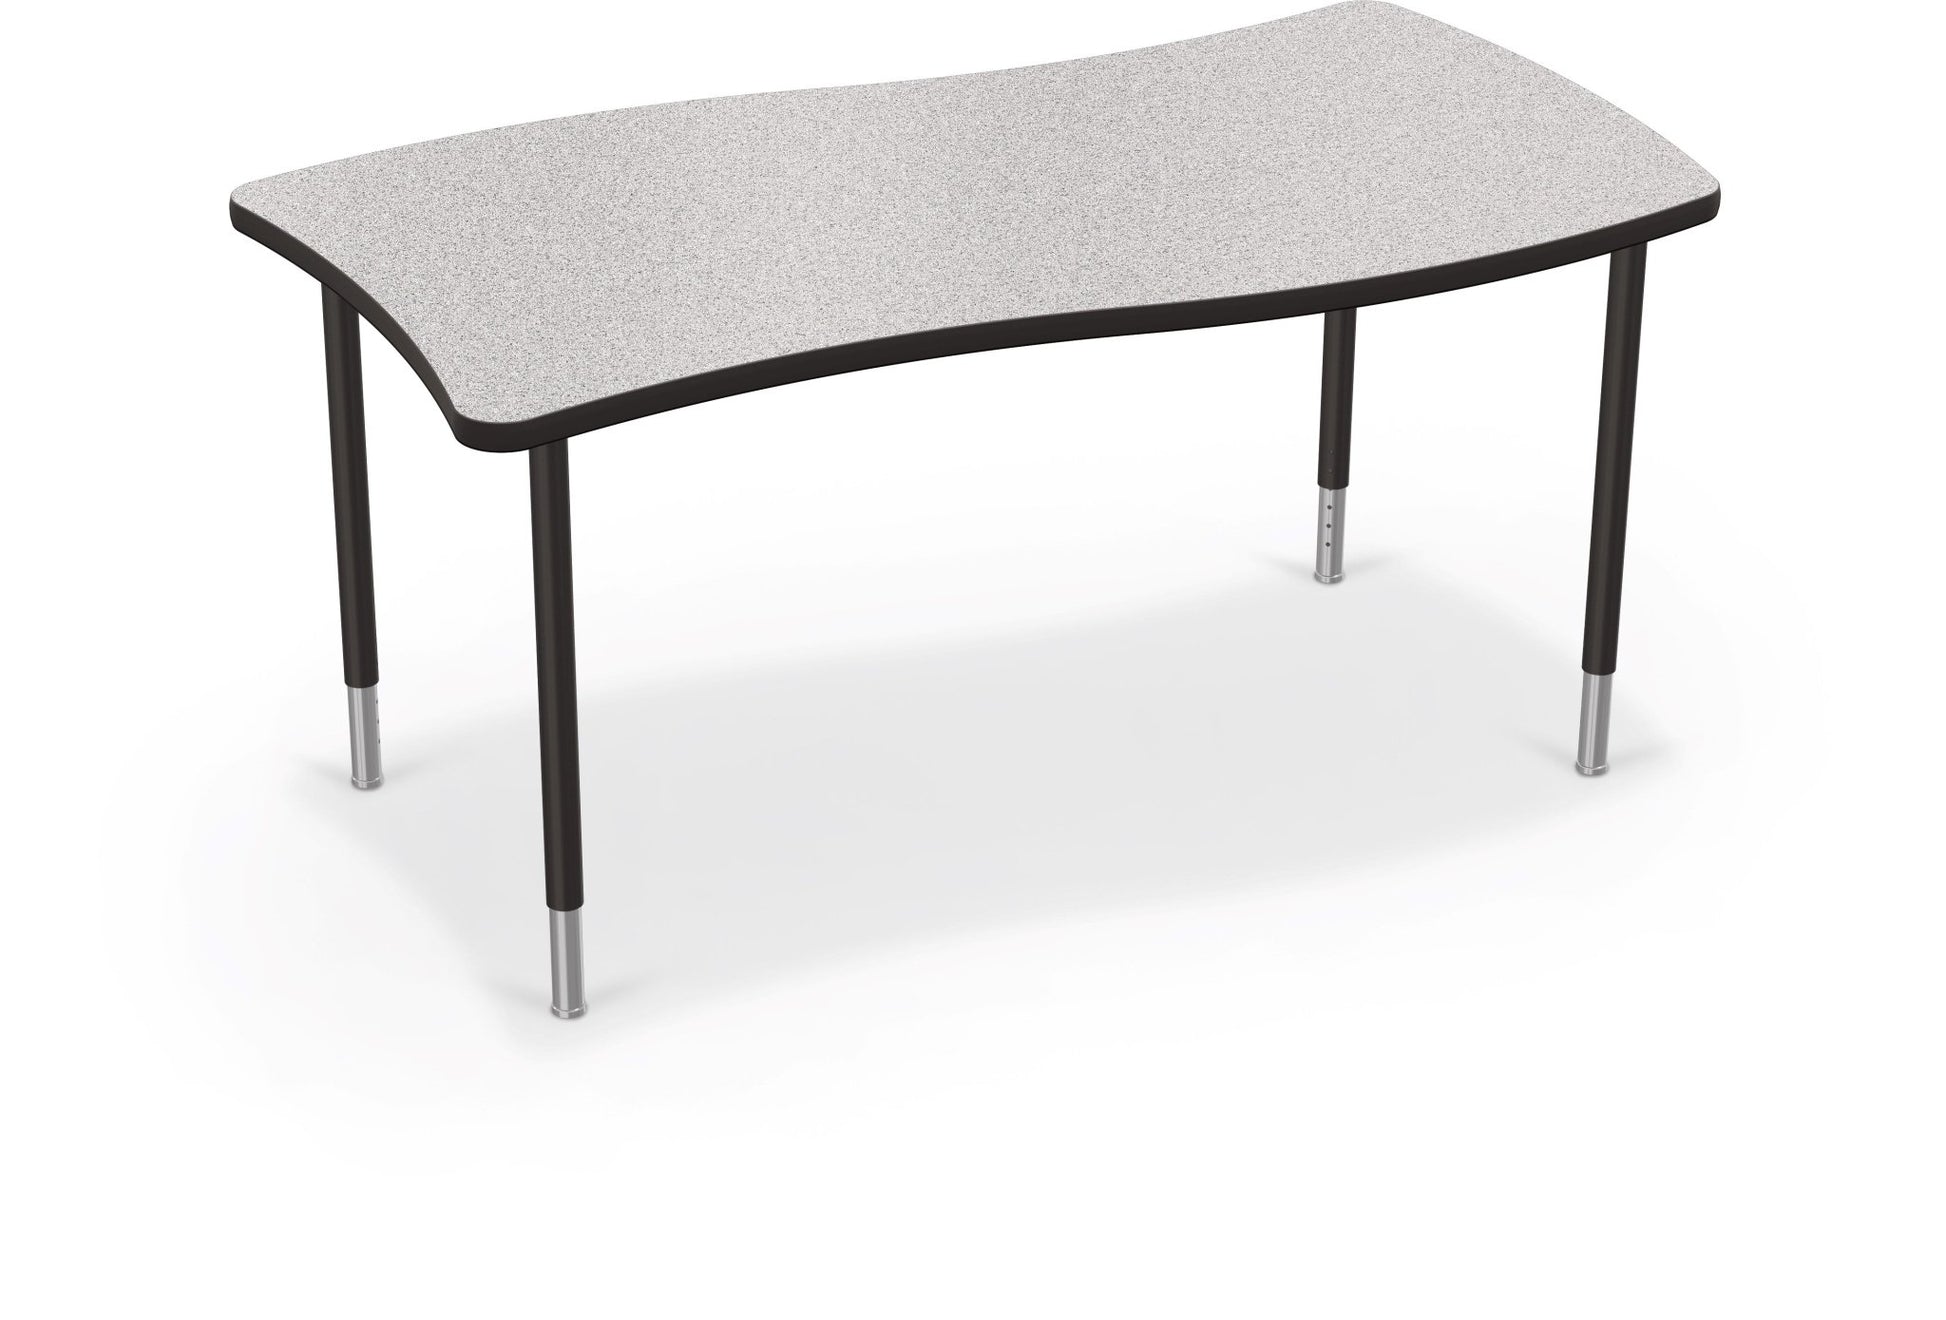 Mooreco Creator Configurable Tables - Rectangle - Black Edgeband - Black Legs (Mooreco 1633Q1) - SchoolOutlet